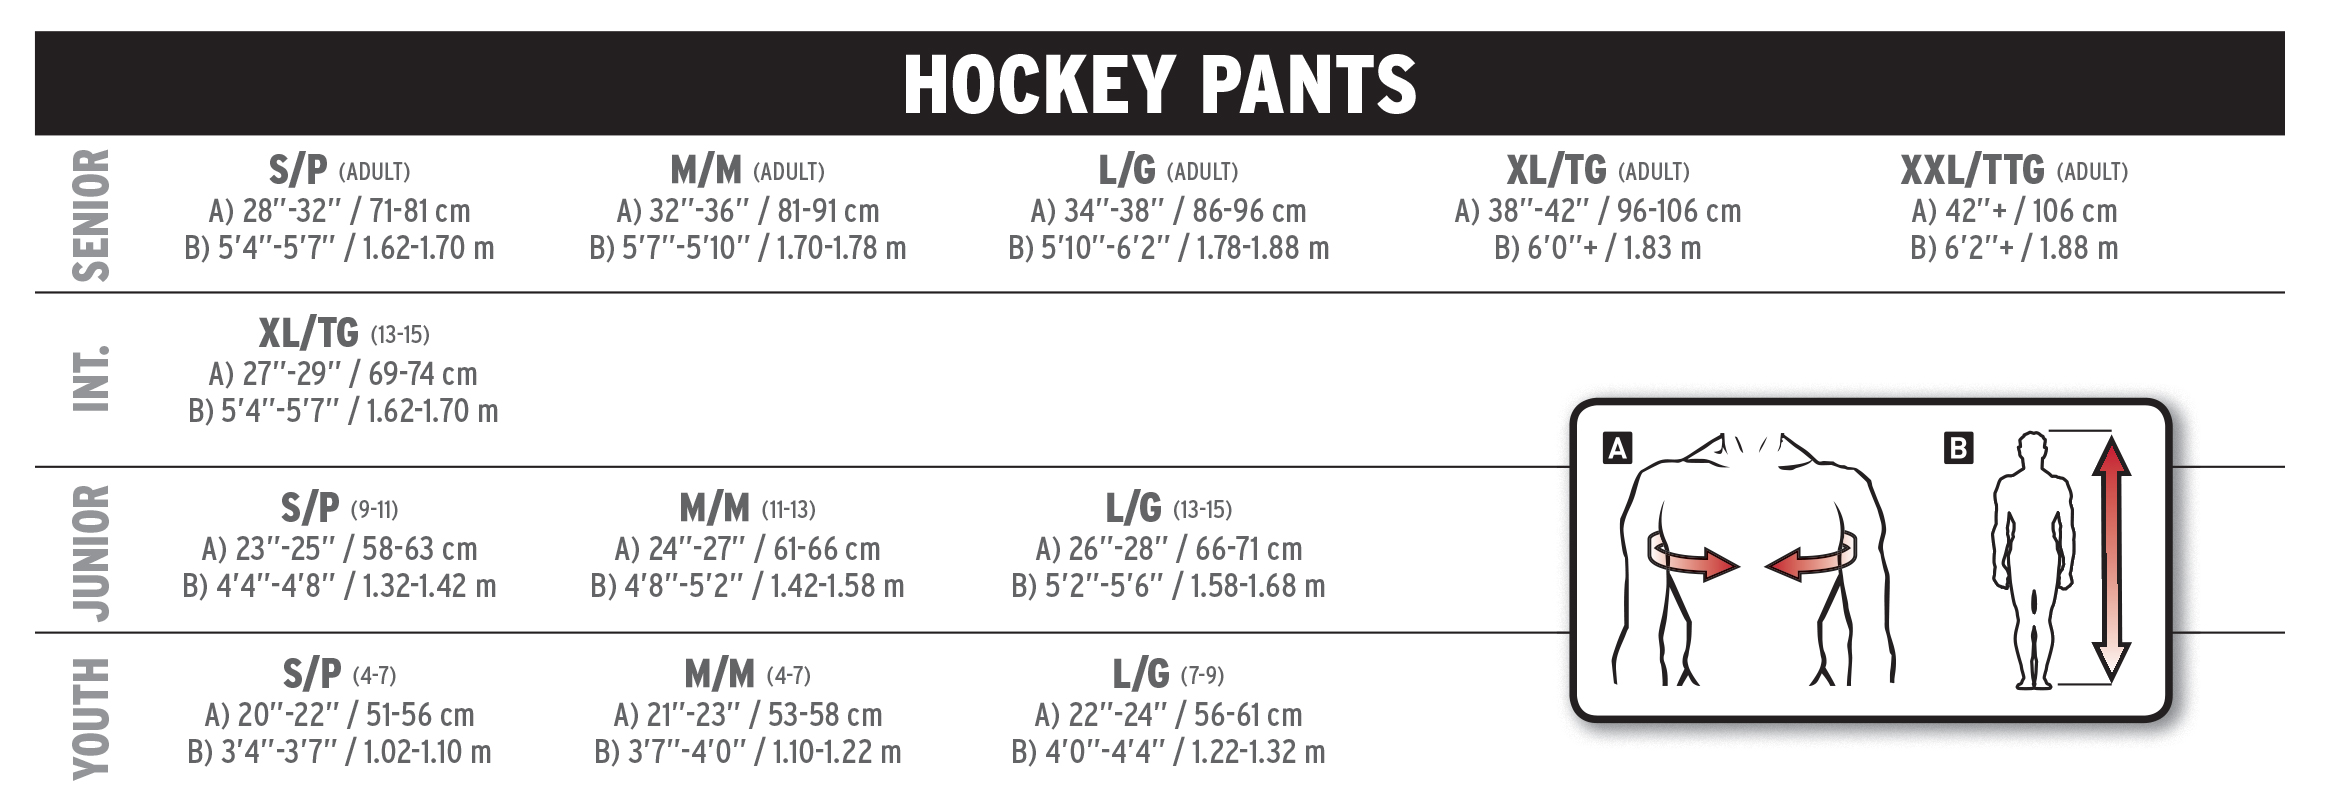 Ccm Hockey Pants Size Chart